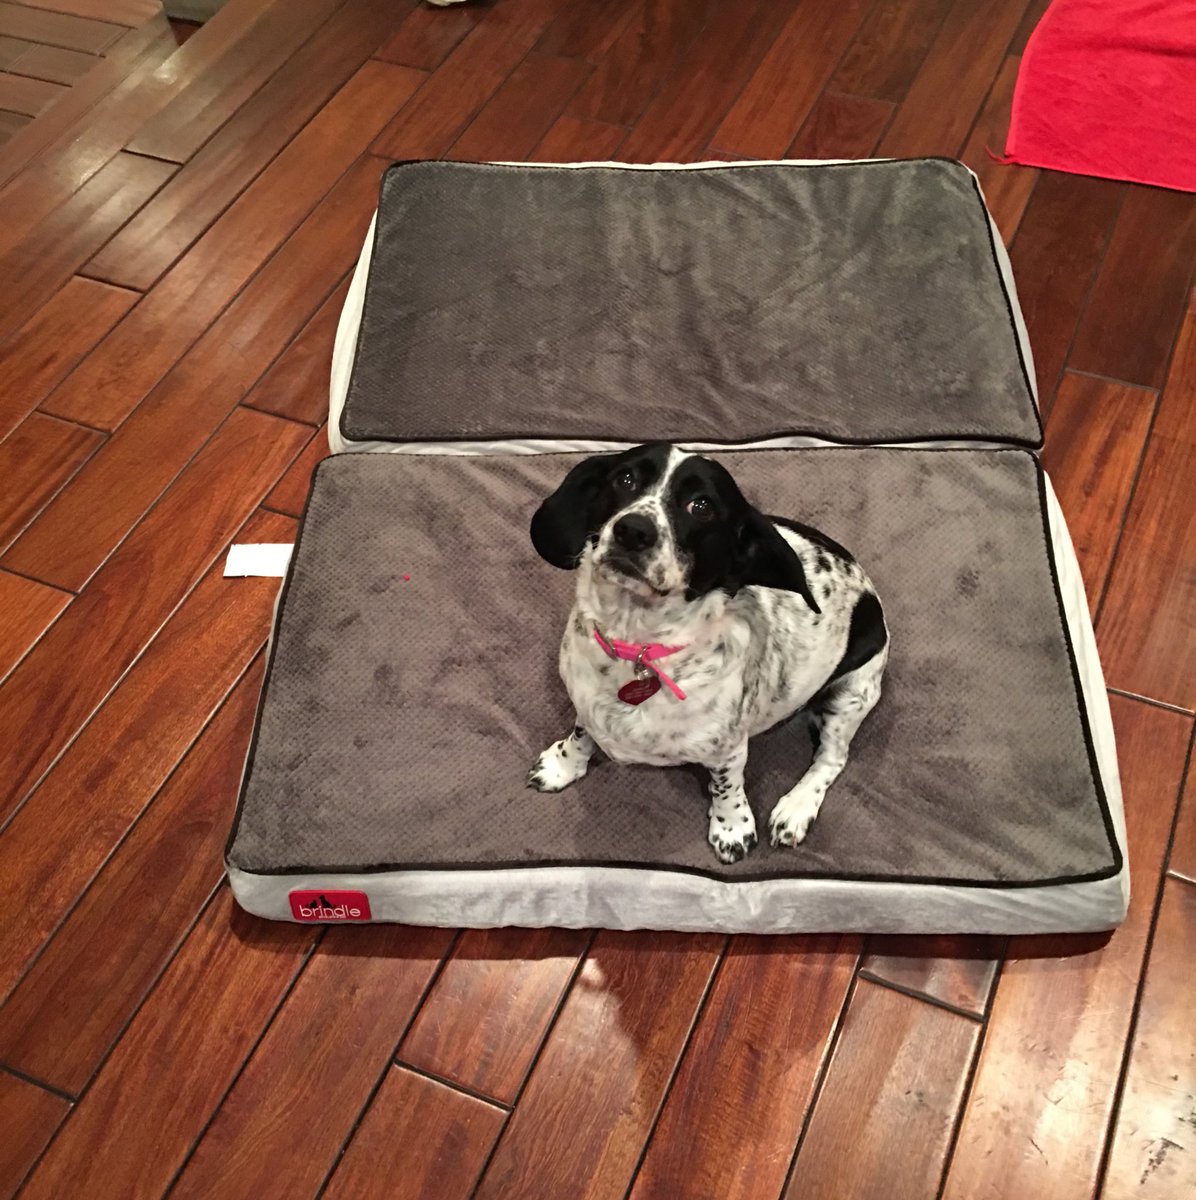 Thank u @MattressFirm for resolving issue fast. Dogs love their brindle memory foam beds. Thank u. @romain_zago https://t.co/GJlyuSScSr